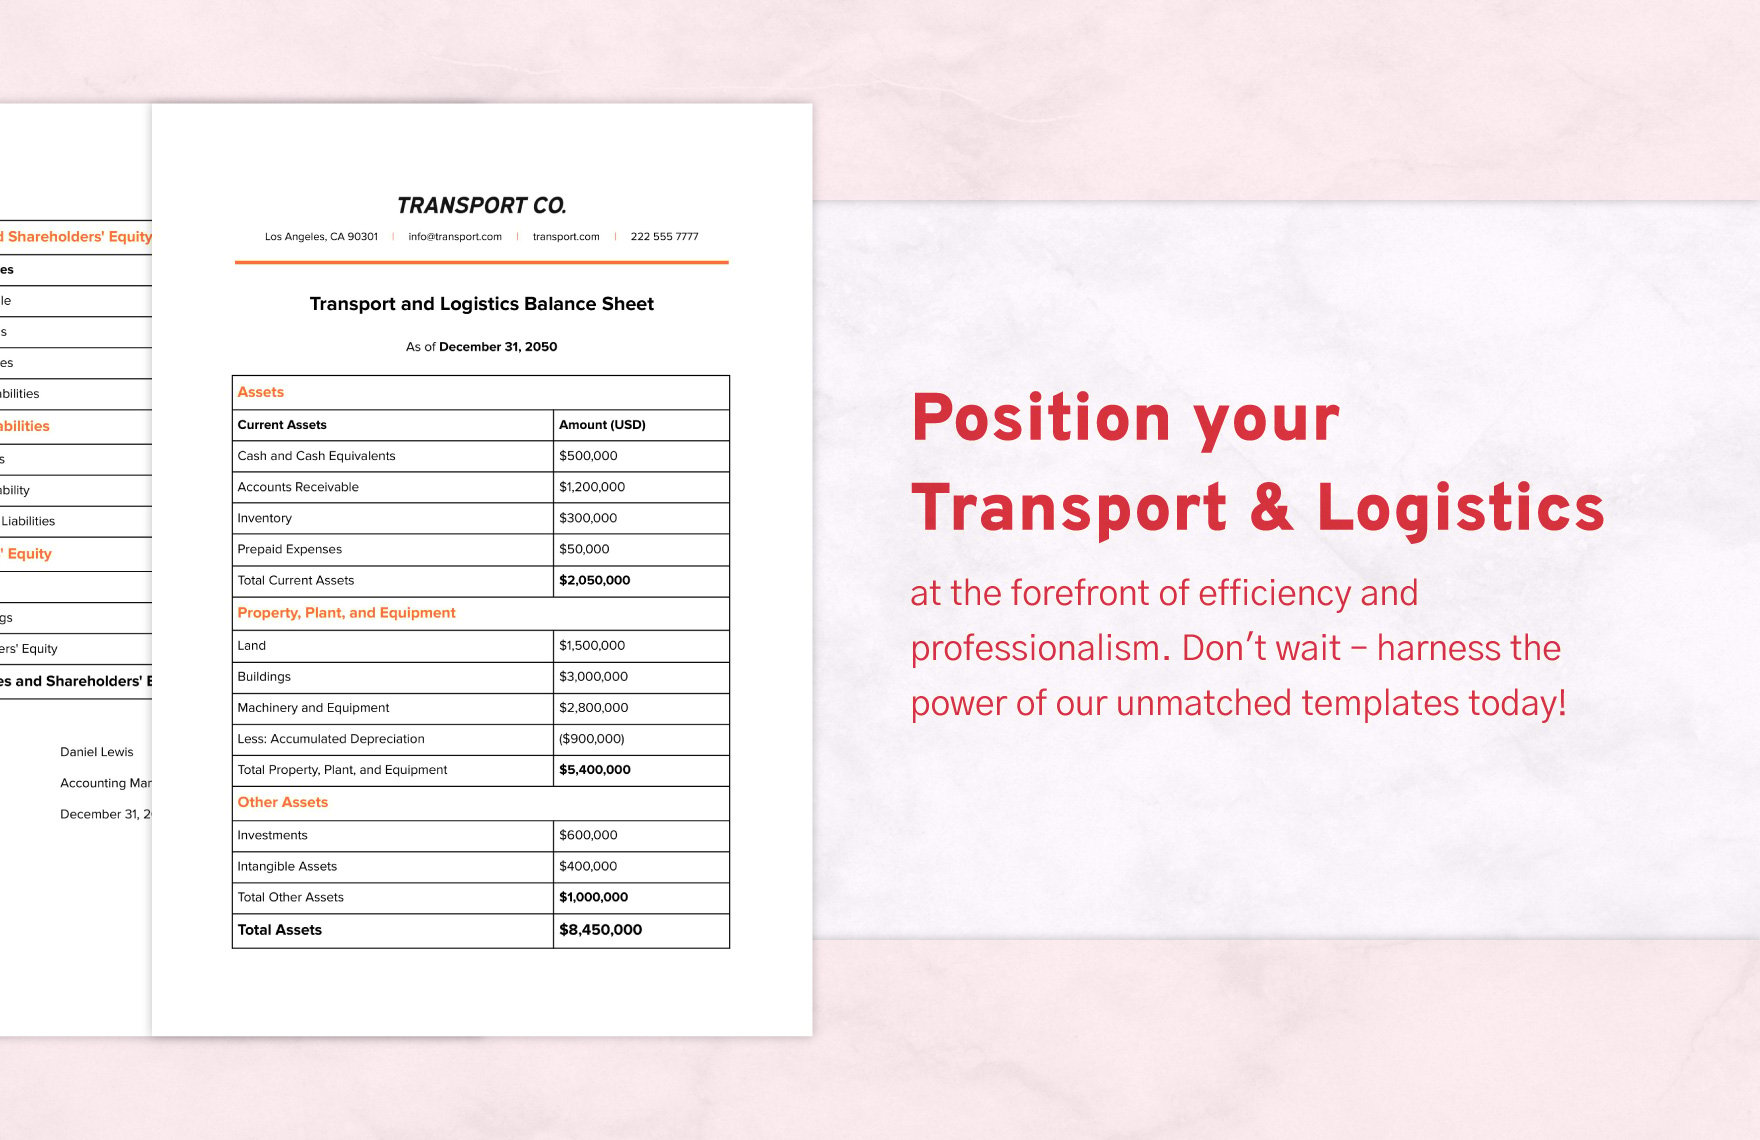 Transport and Logistics Balance Sheet Template